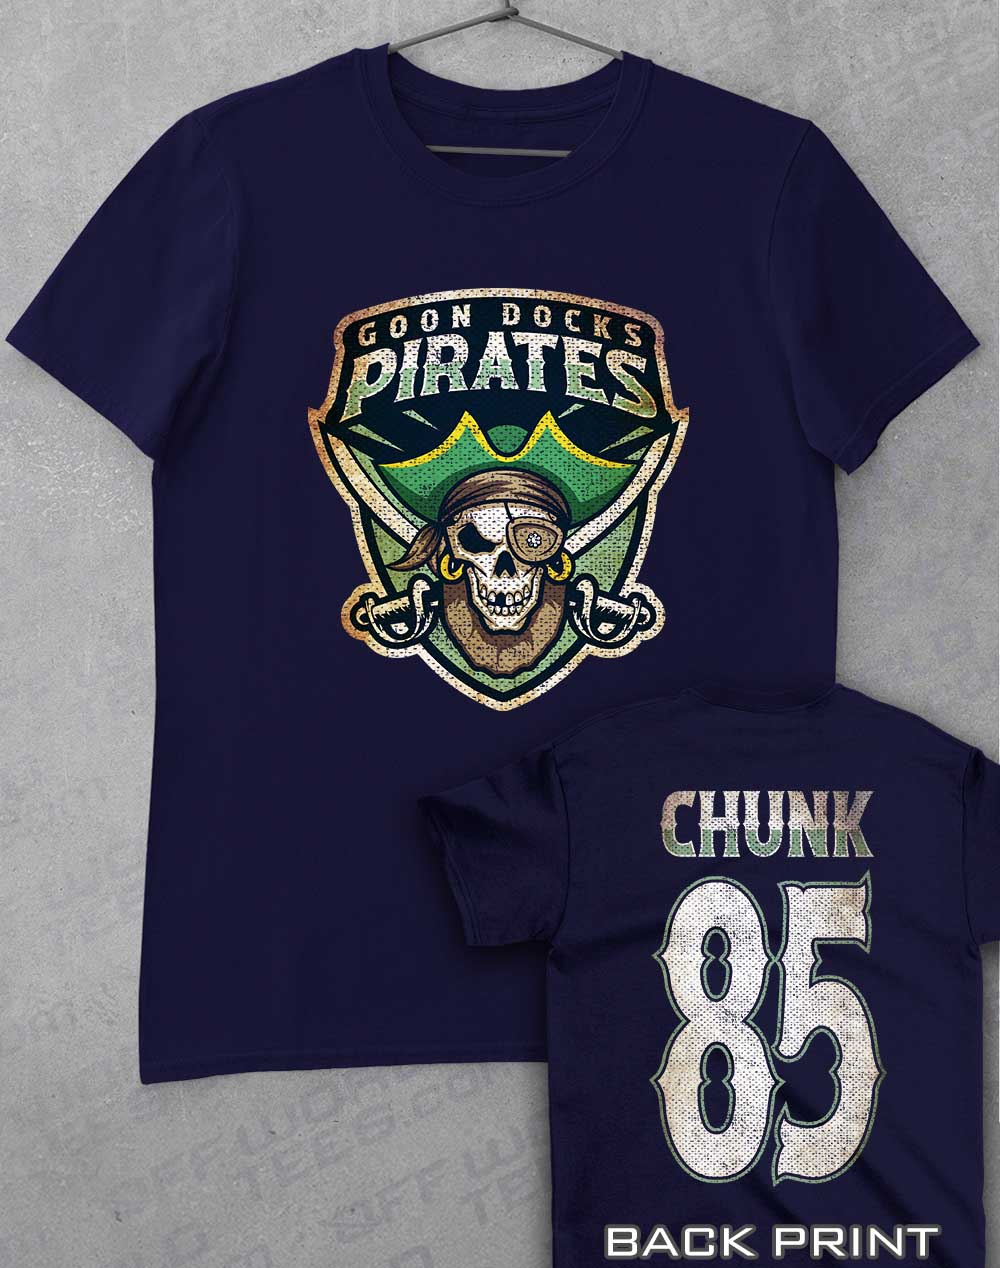 Goon Docks Pirates T-Shirt